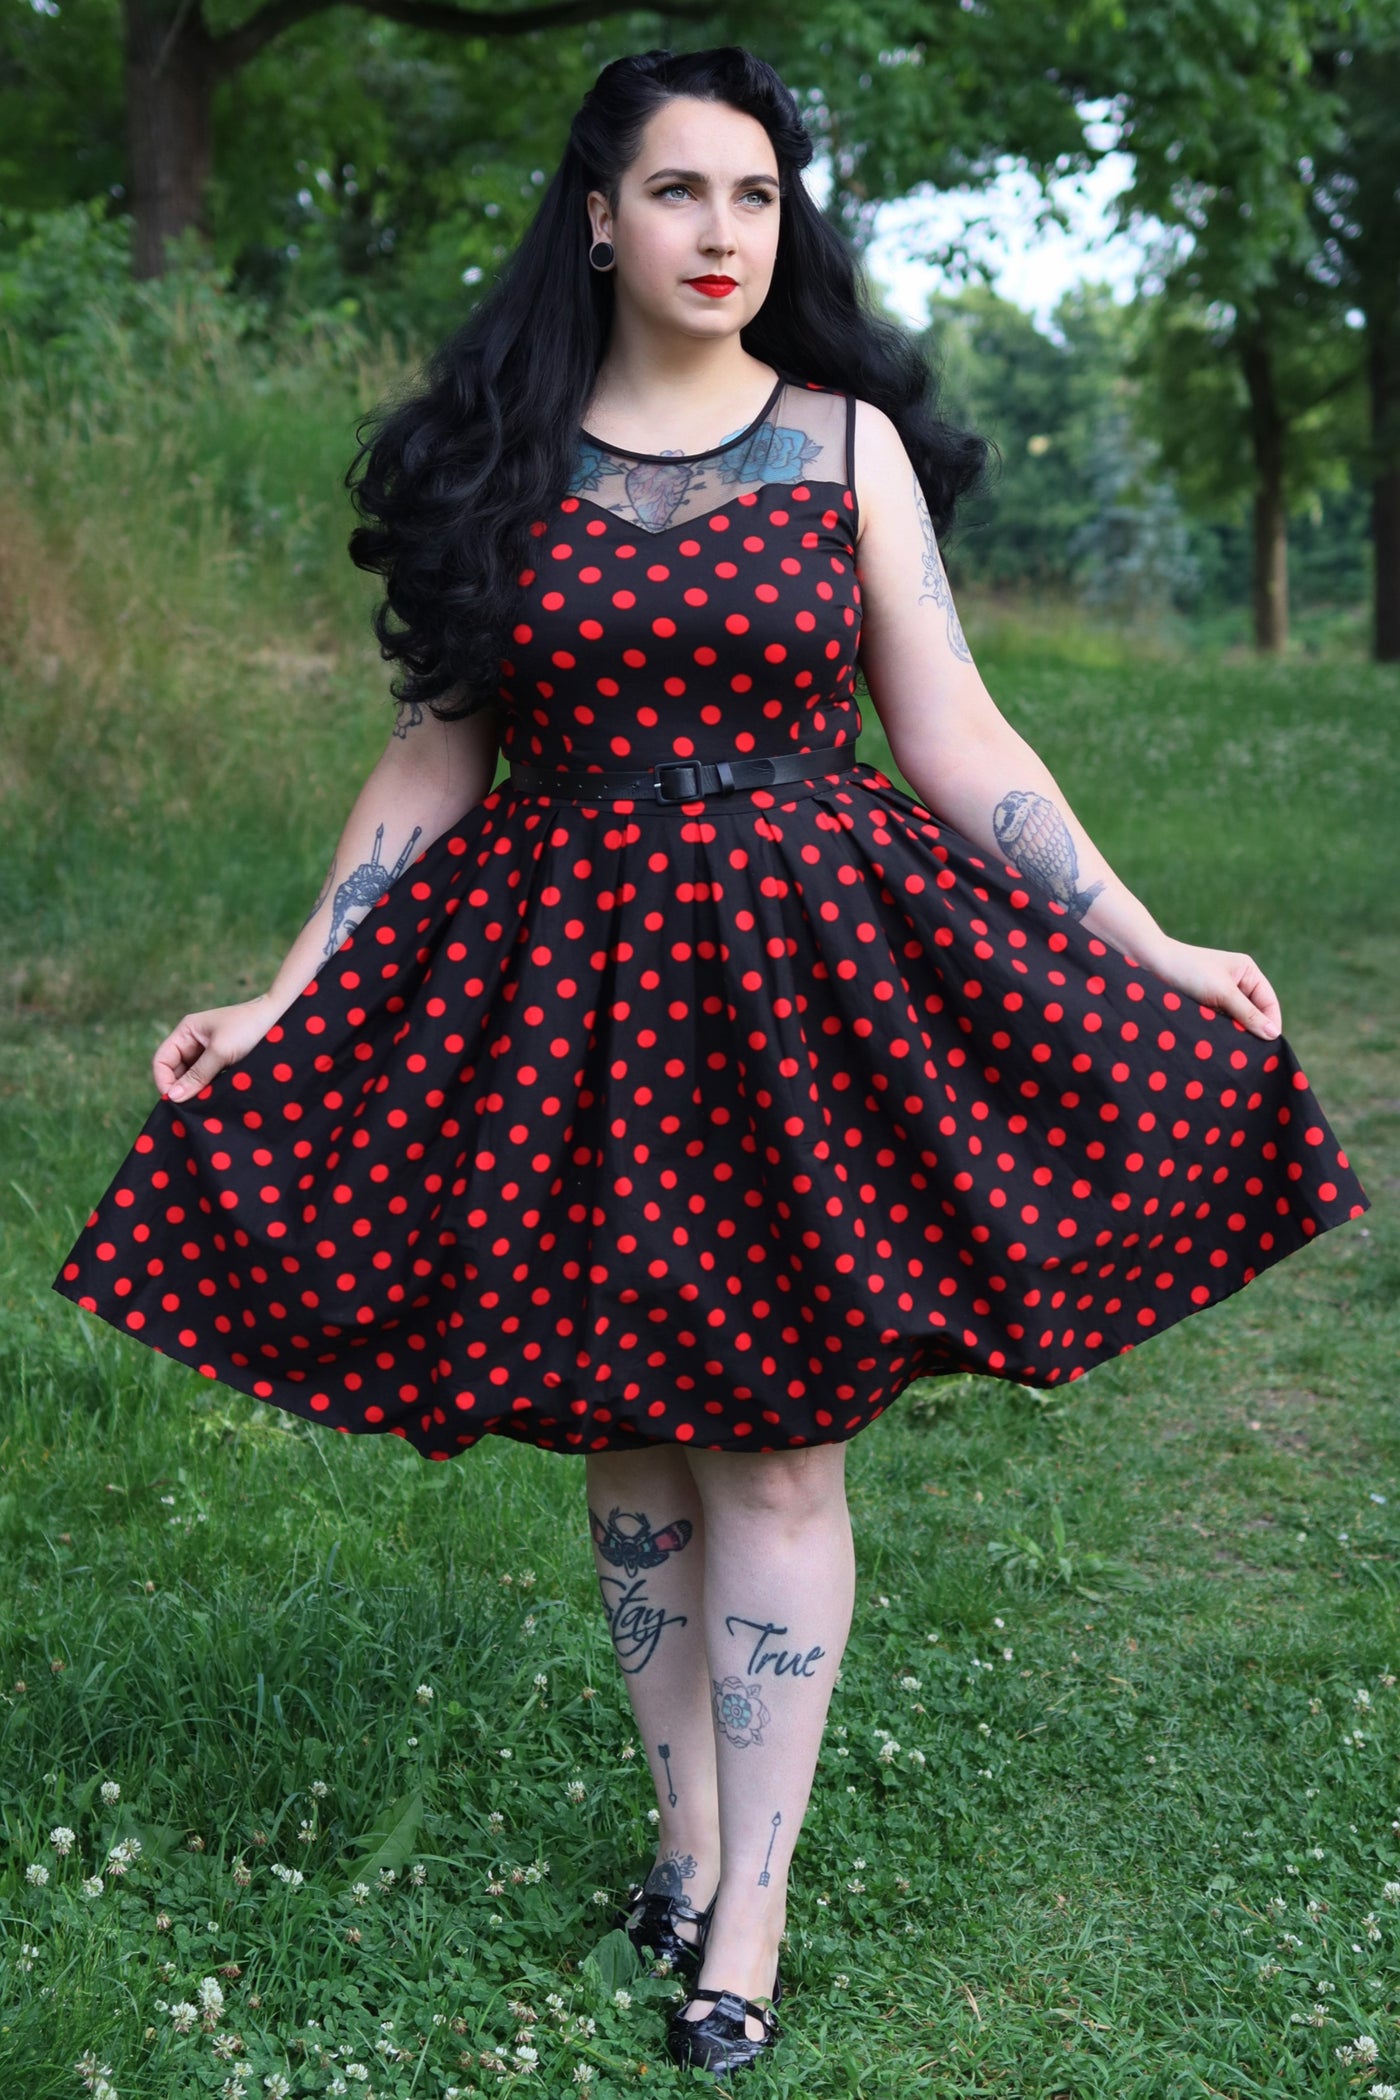 Tea Party Dress in Black/Red Polka Dot Print